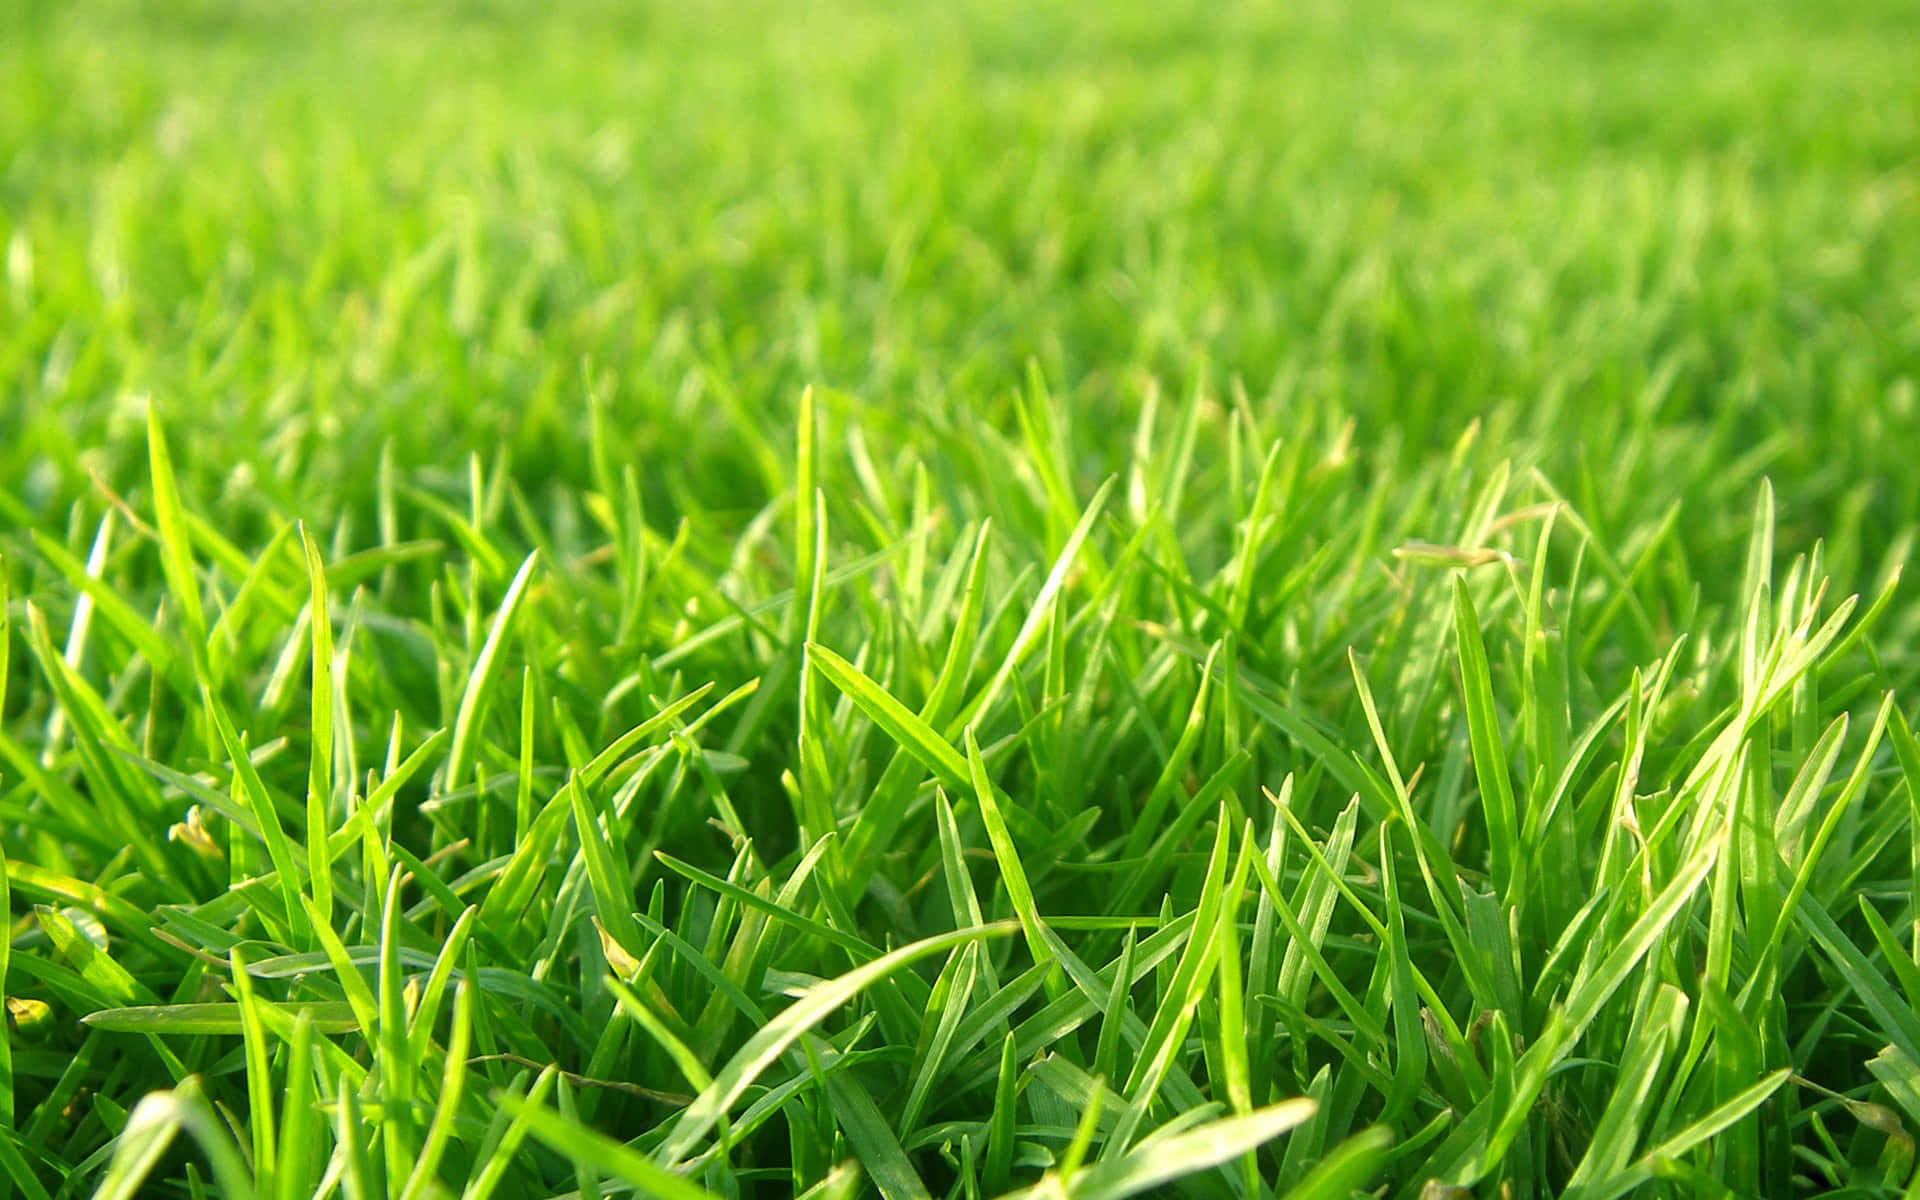 A sea of lush green grass